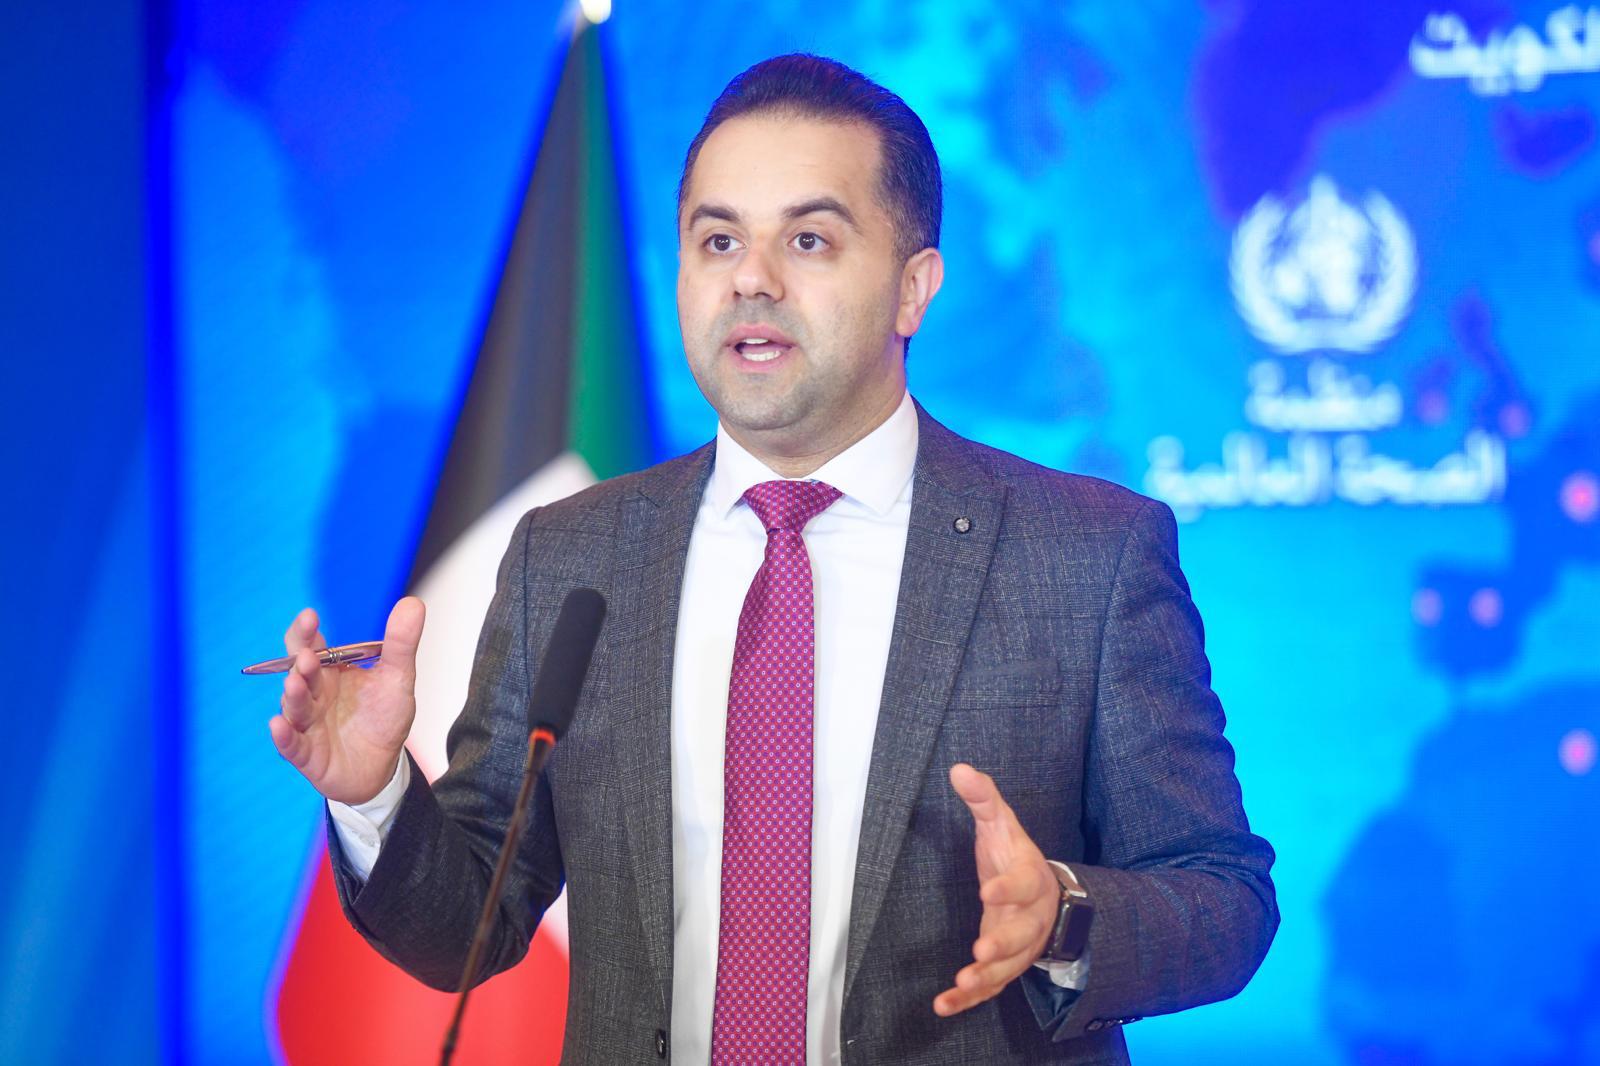 spokesman Dr. Abdullah Al-Sanad